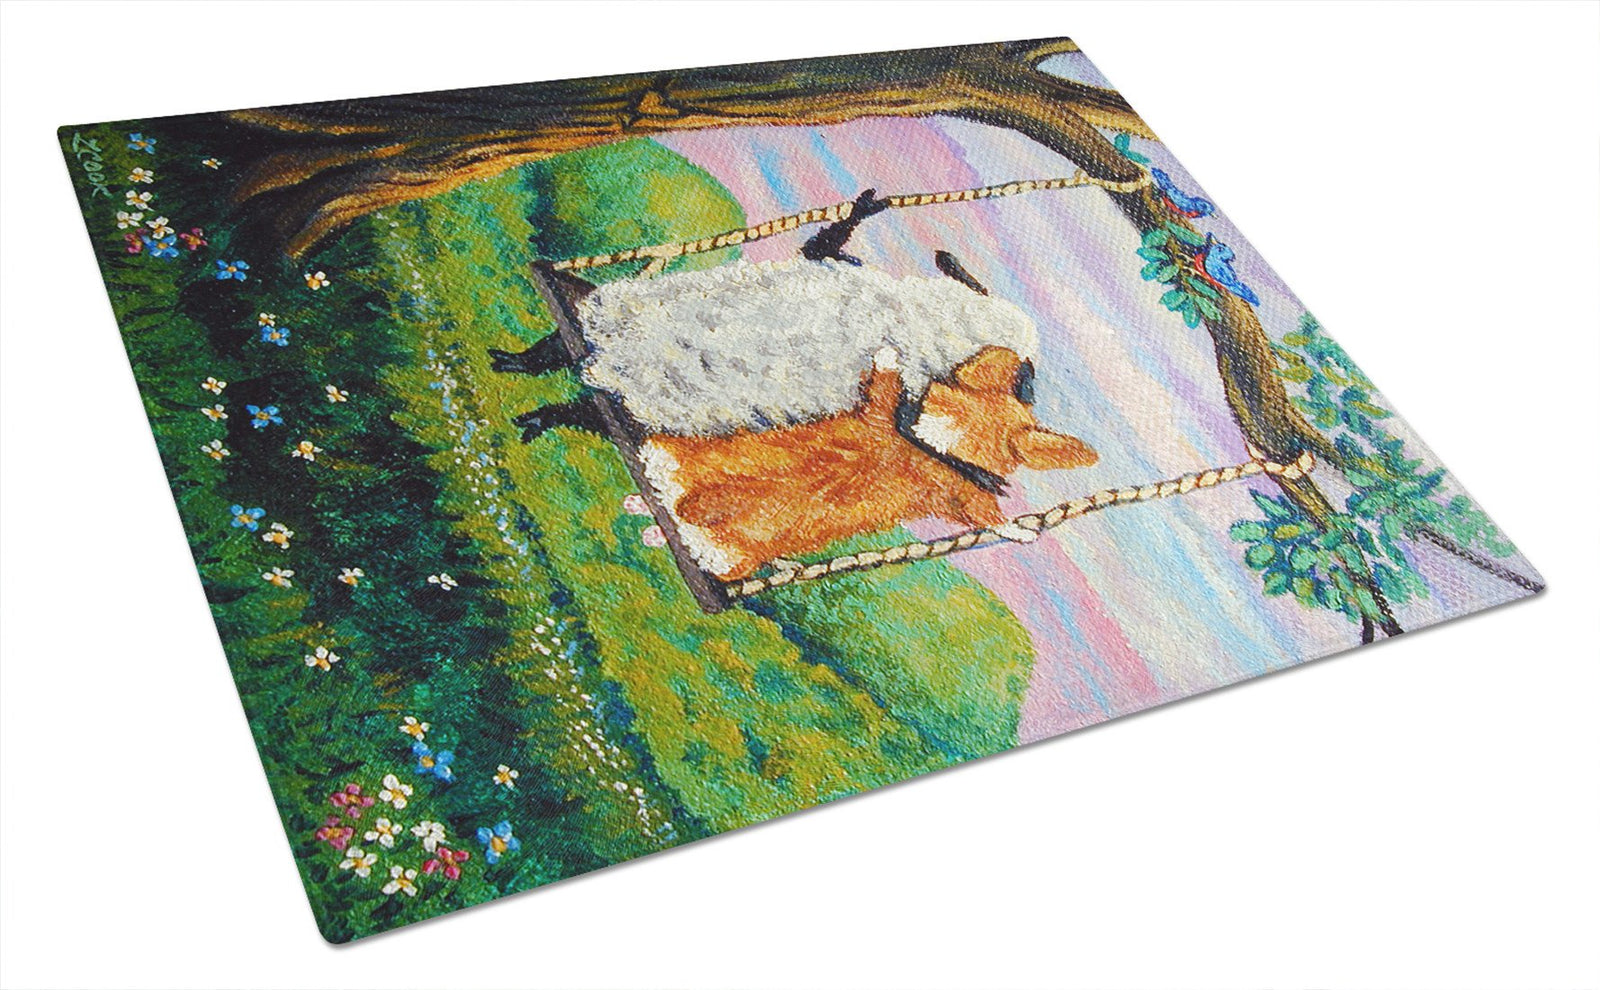 Corgi With Sheep Love Grows Glass Cutting Board Large 7439LCB by Caroline's Treasures